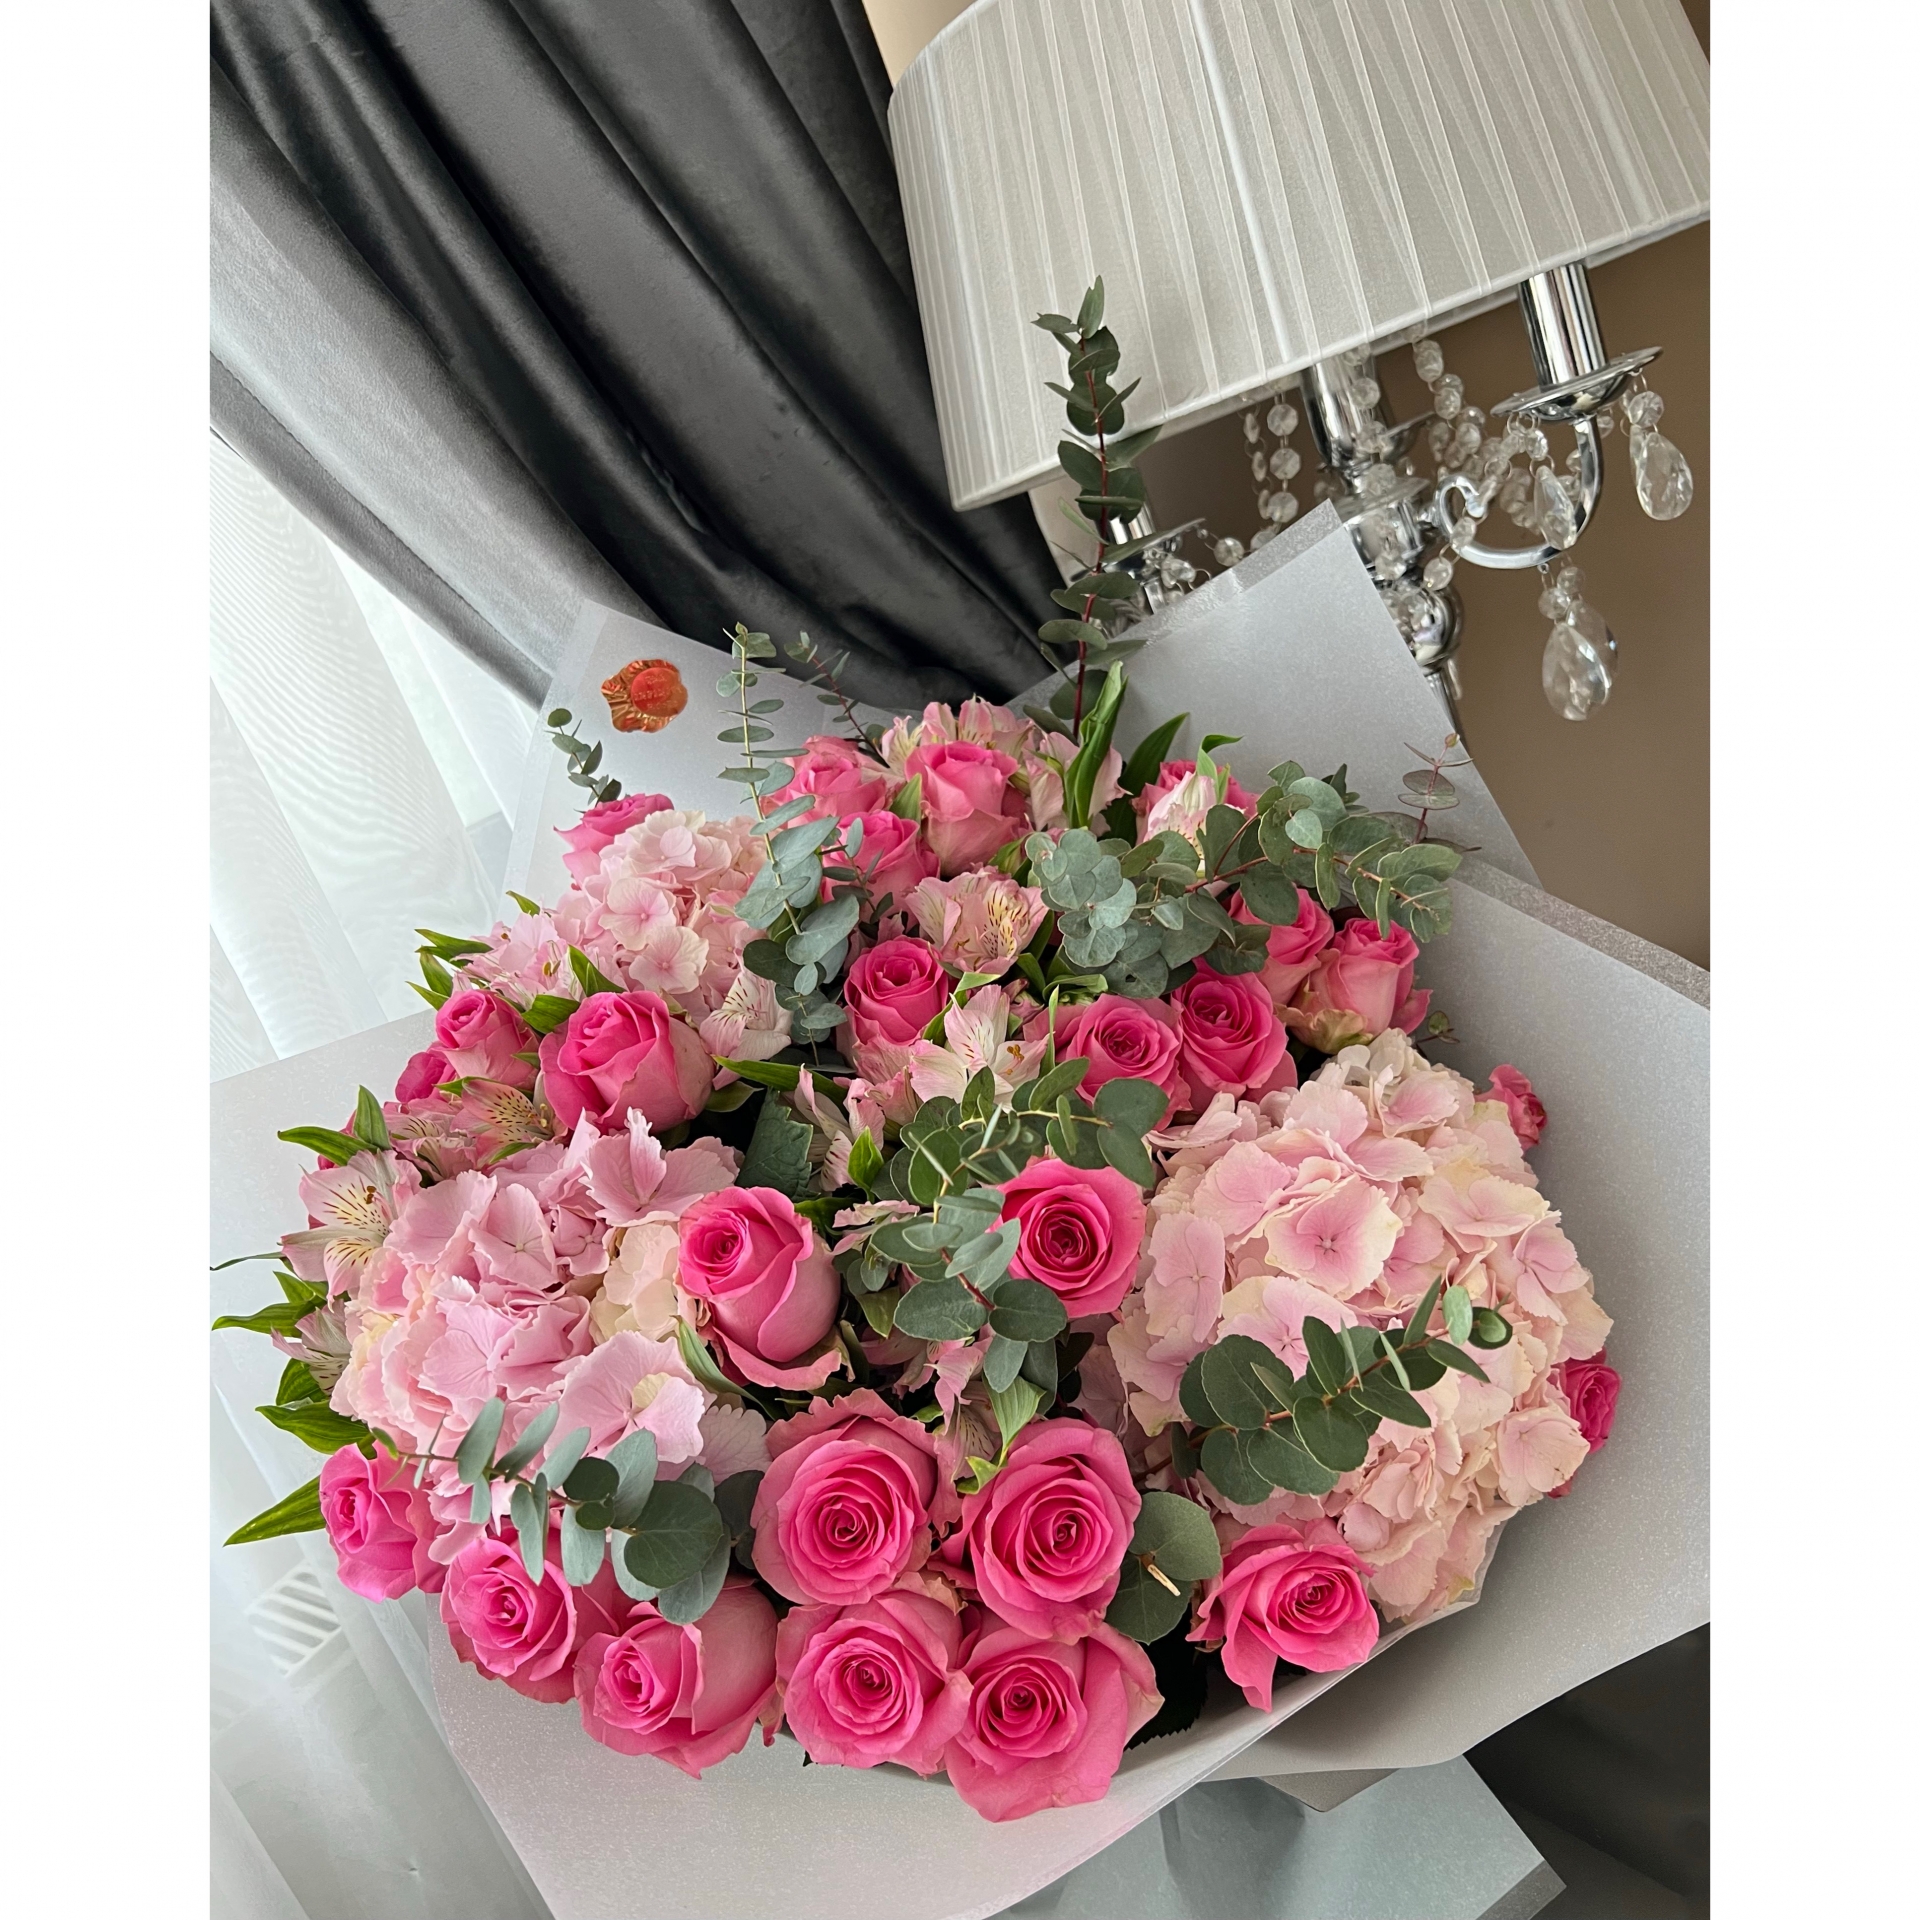 Buchet cu trandafiri roz naturali ,lisianthus roz ,hortensie, eucalipt 